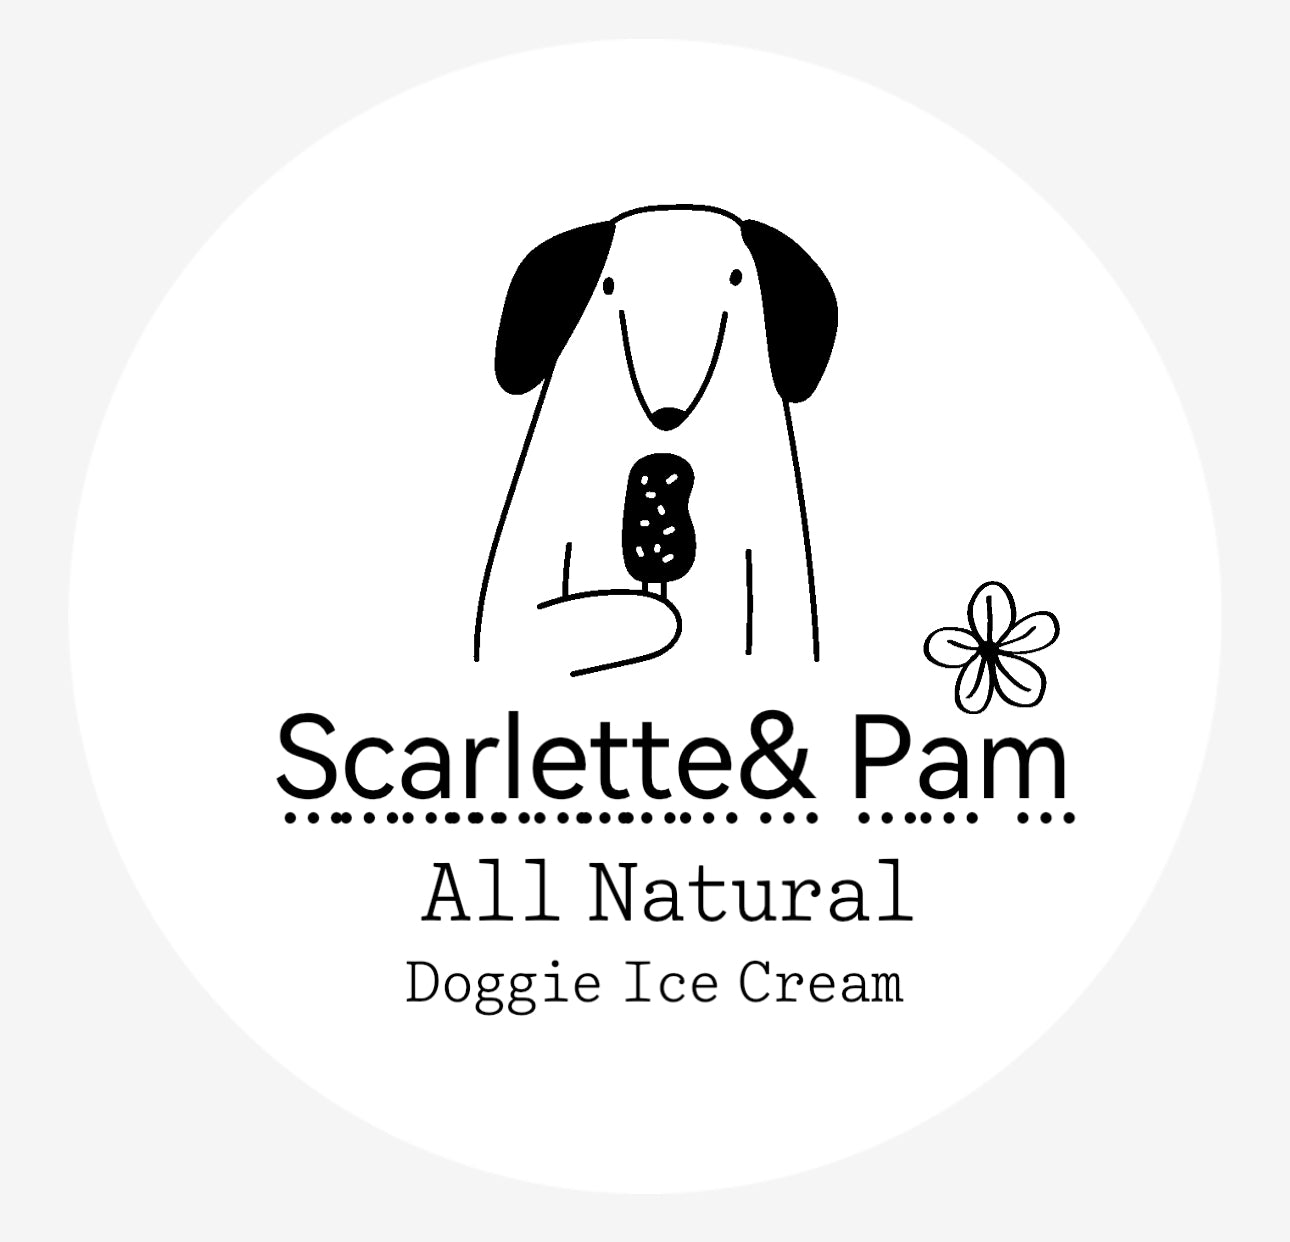 Scarlette & Pam Doggie Ice Cream